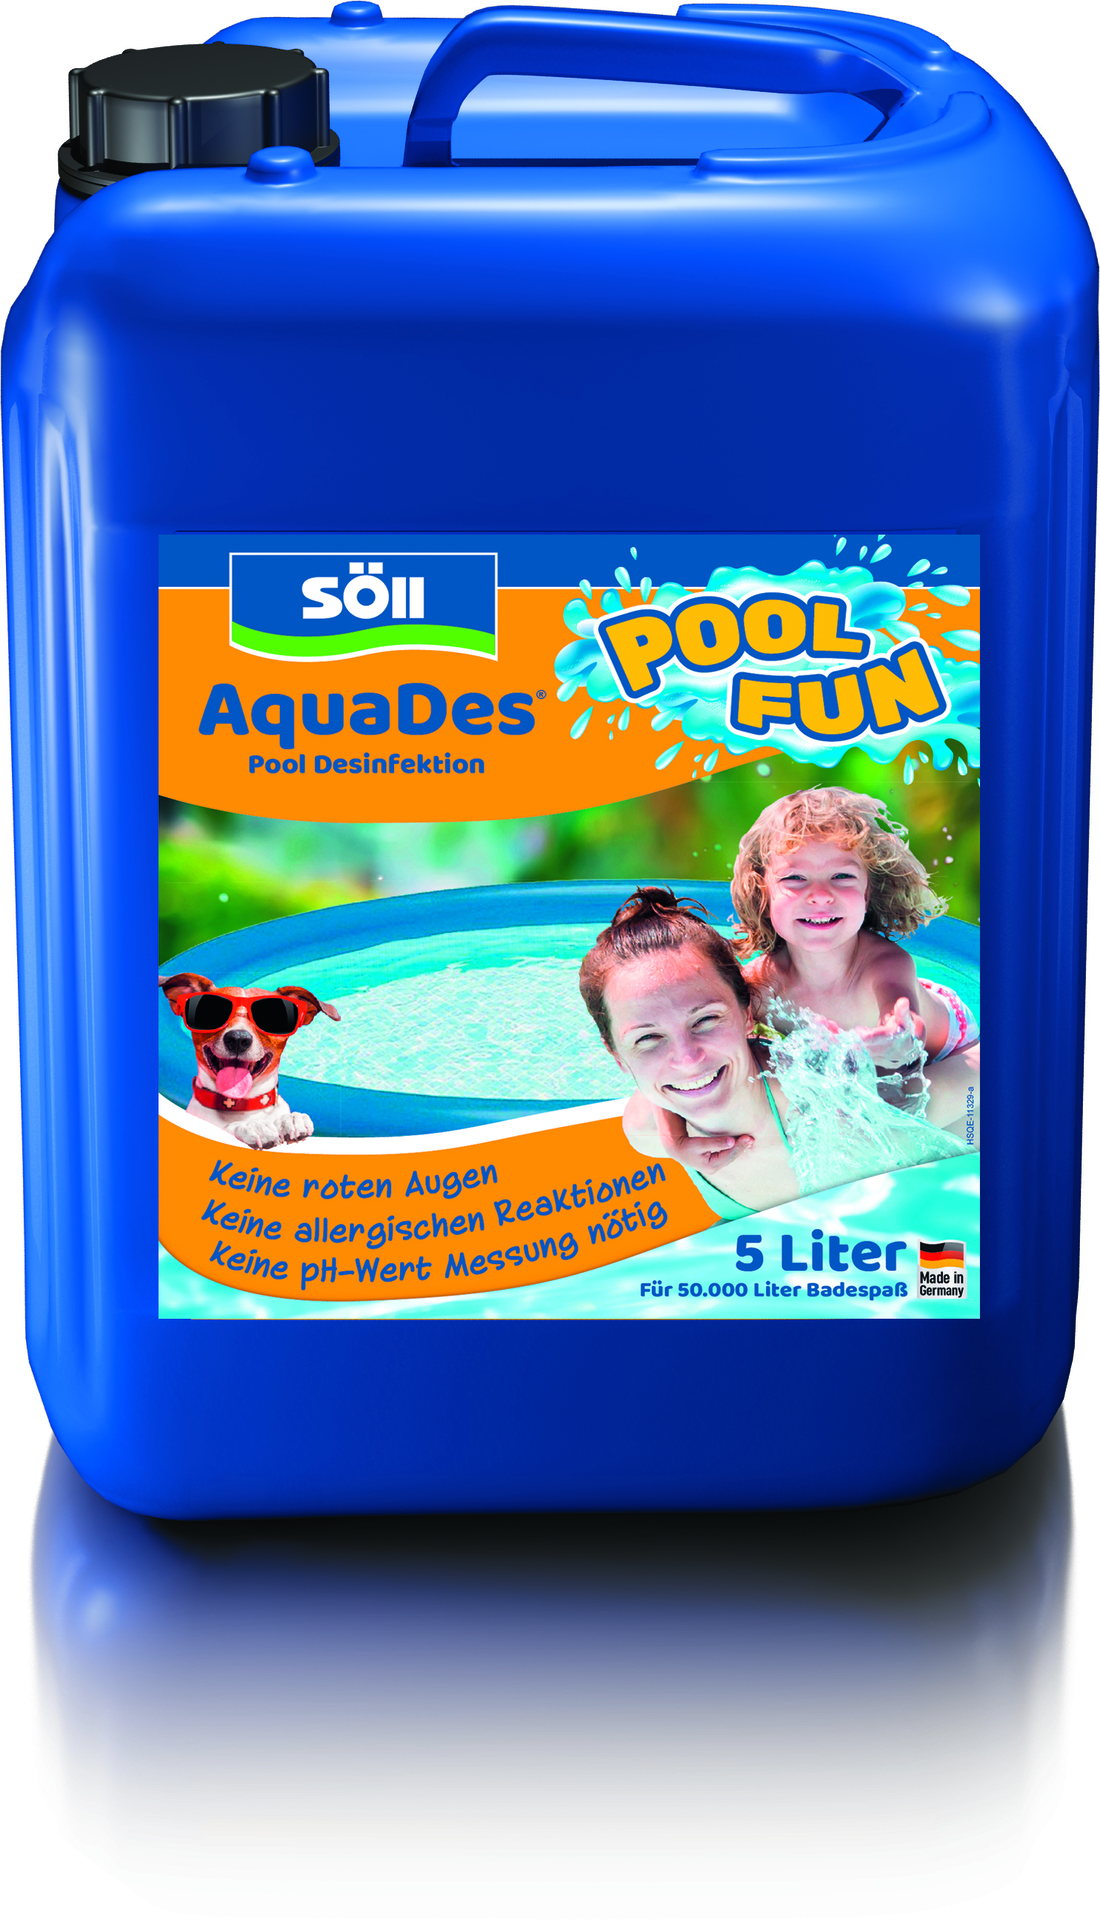 AquaDes Pool-Desinfektion